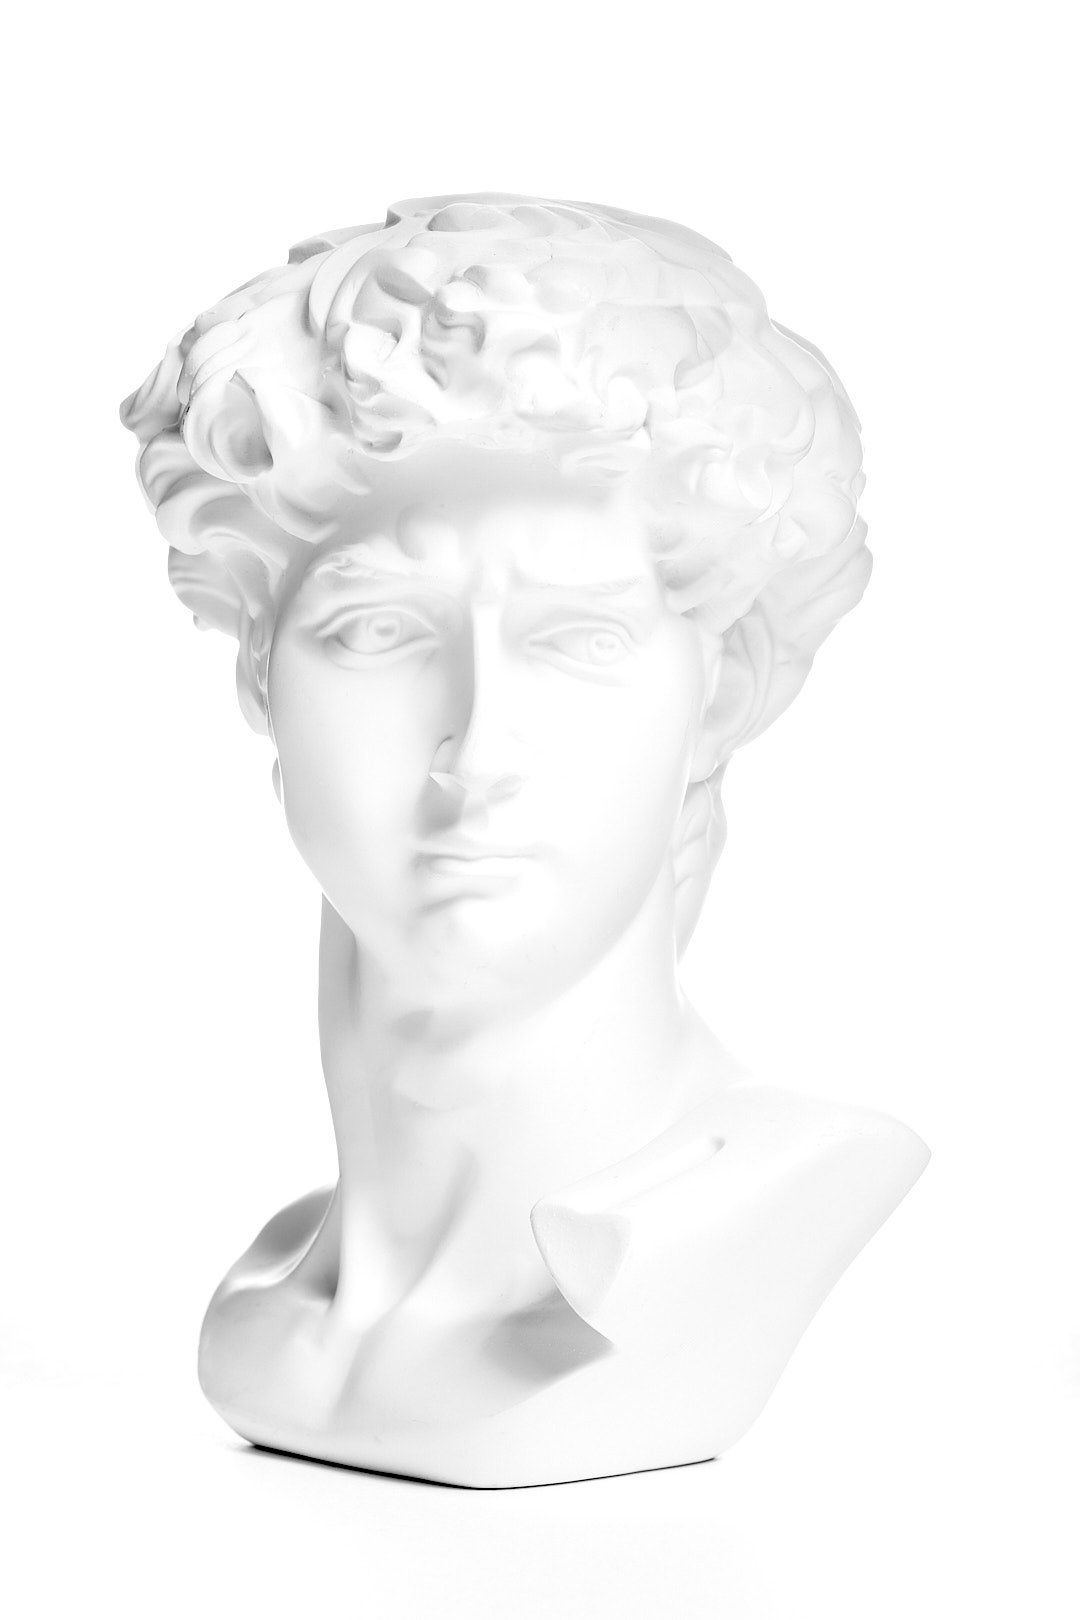 statue sculpture clay 3D architecture roman Michelangelo davide Italy